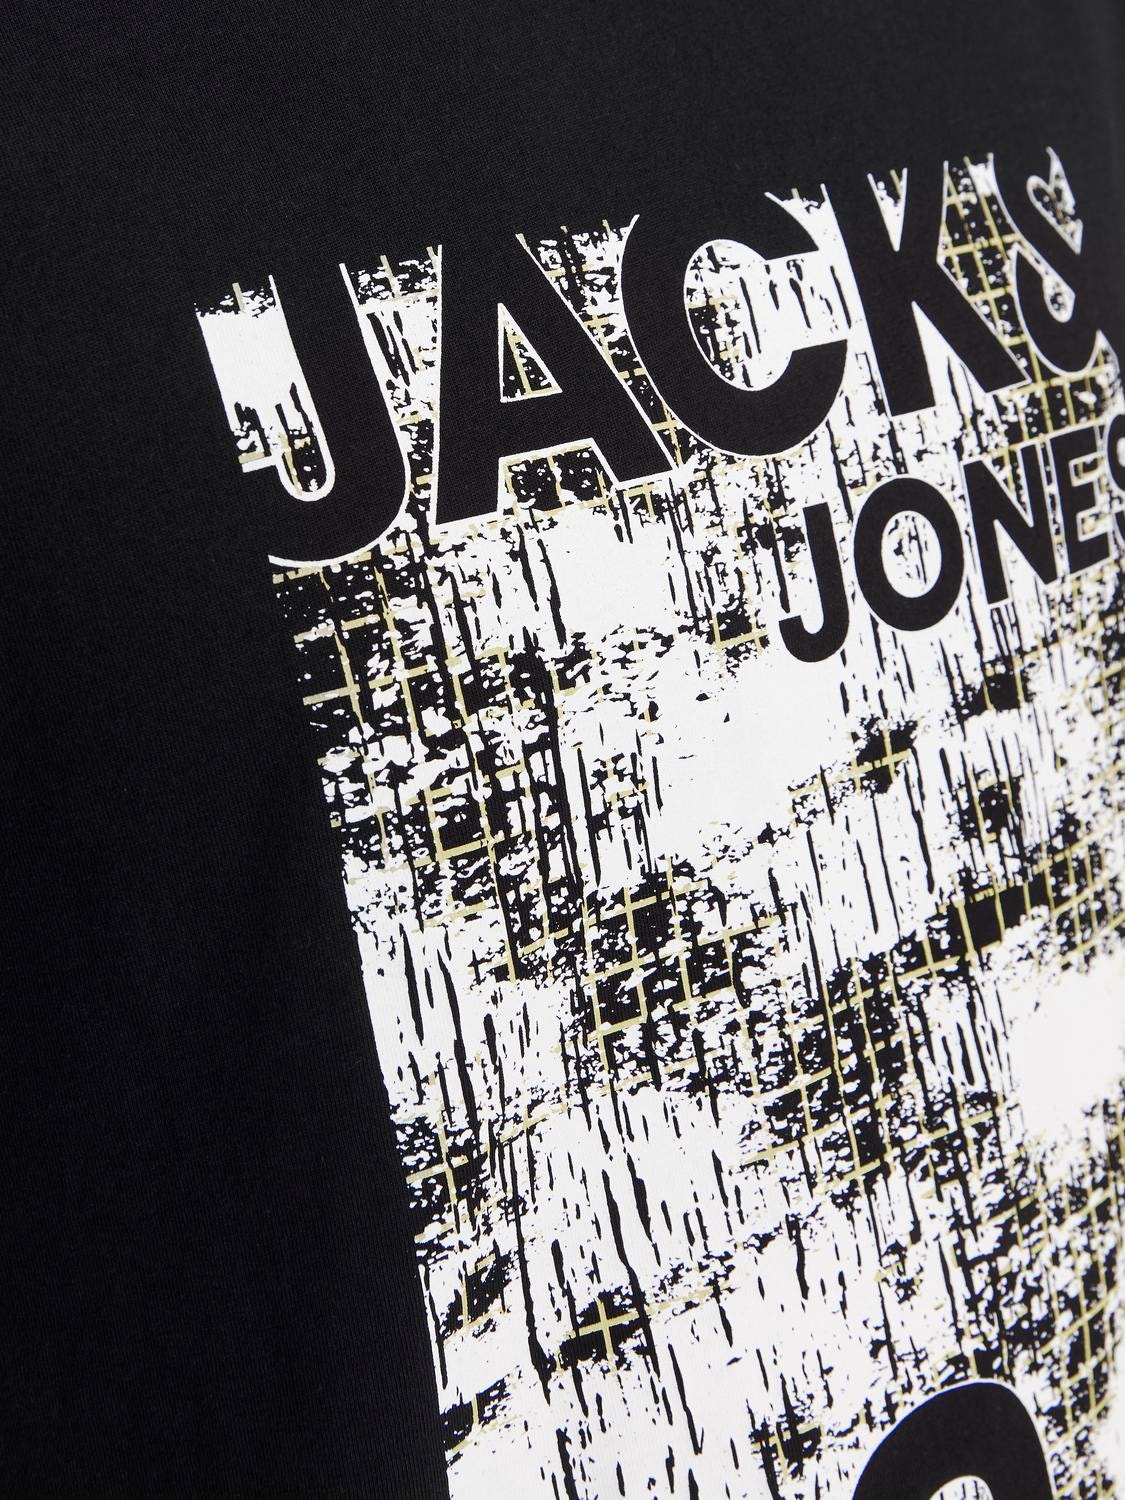 Jack & Jones Logo Crew neck T-shirt -Black - 12255025